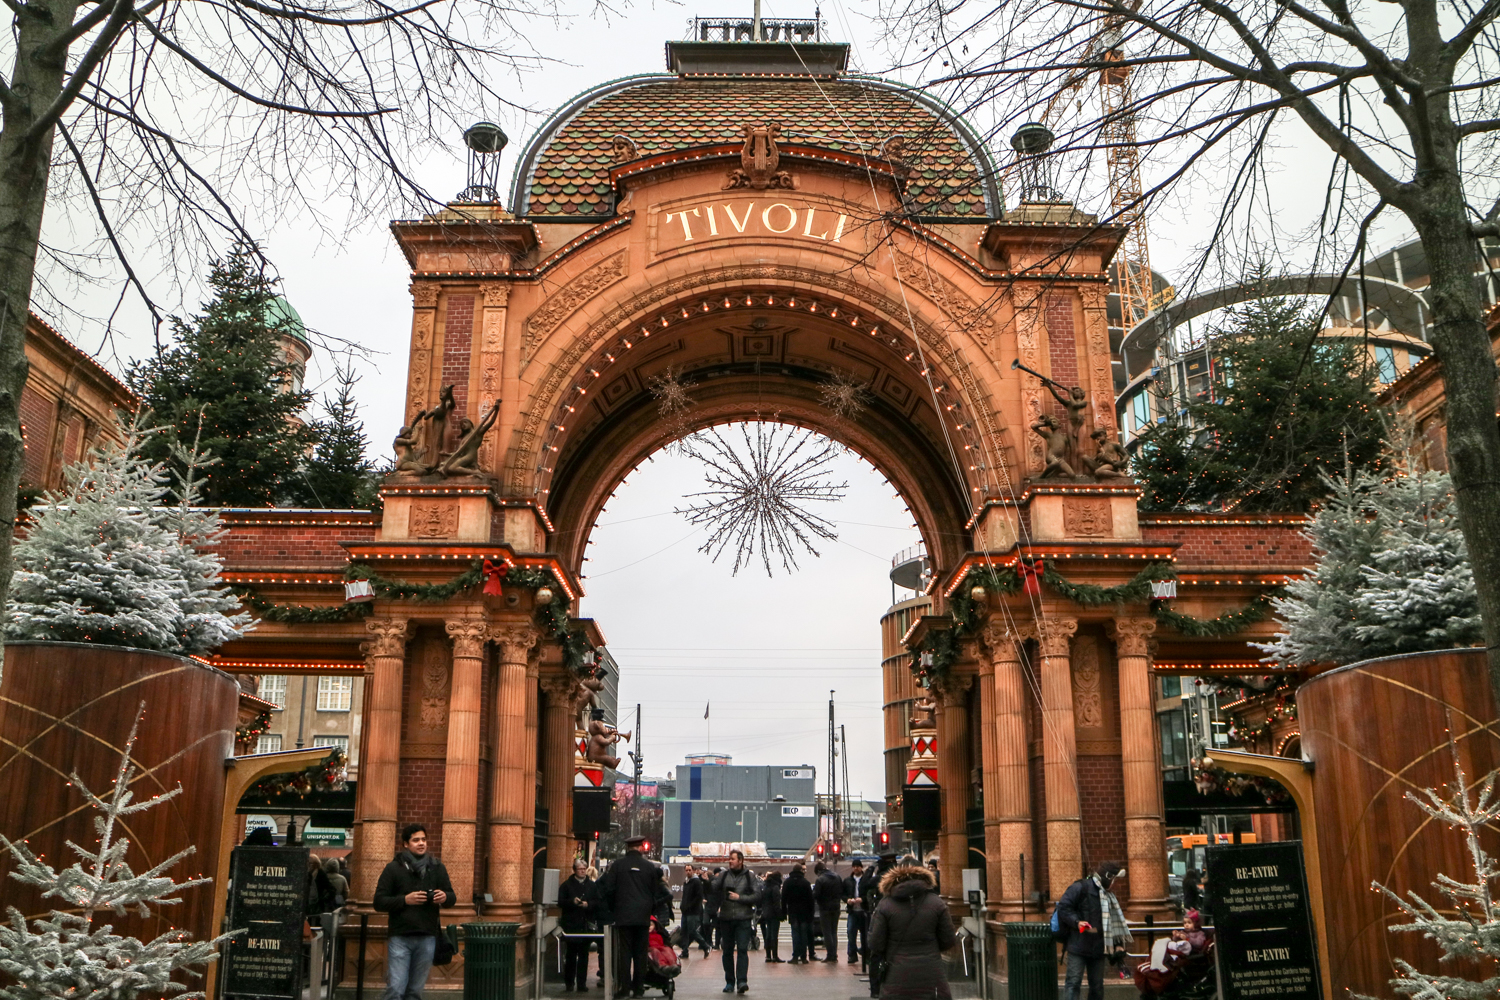 Visit to Tivoli Gardens the london thing